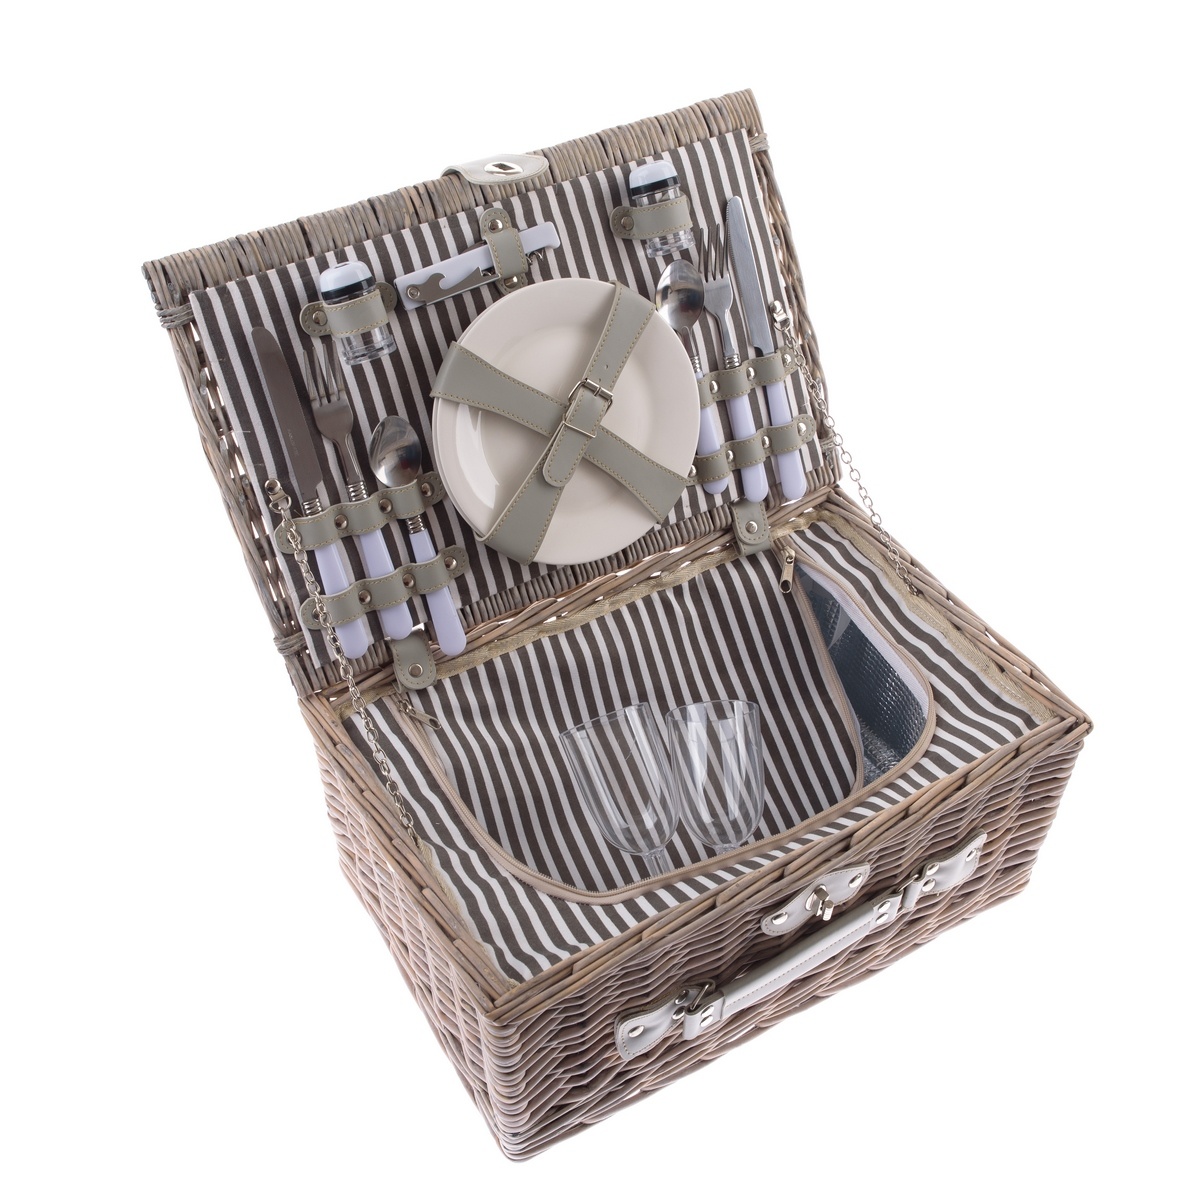 2 személyes fonott piknikkosár termoszdobozzal, 42 x 28 x 20 cm, 3,25 kg